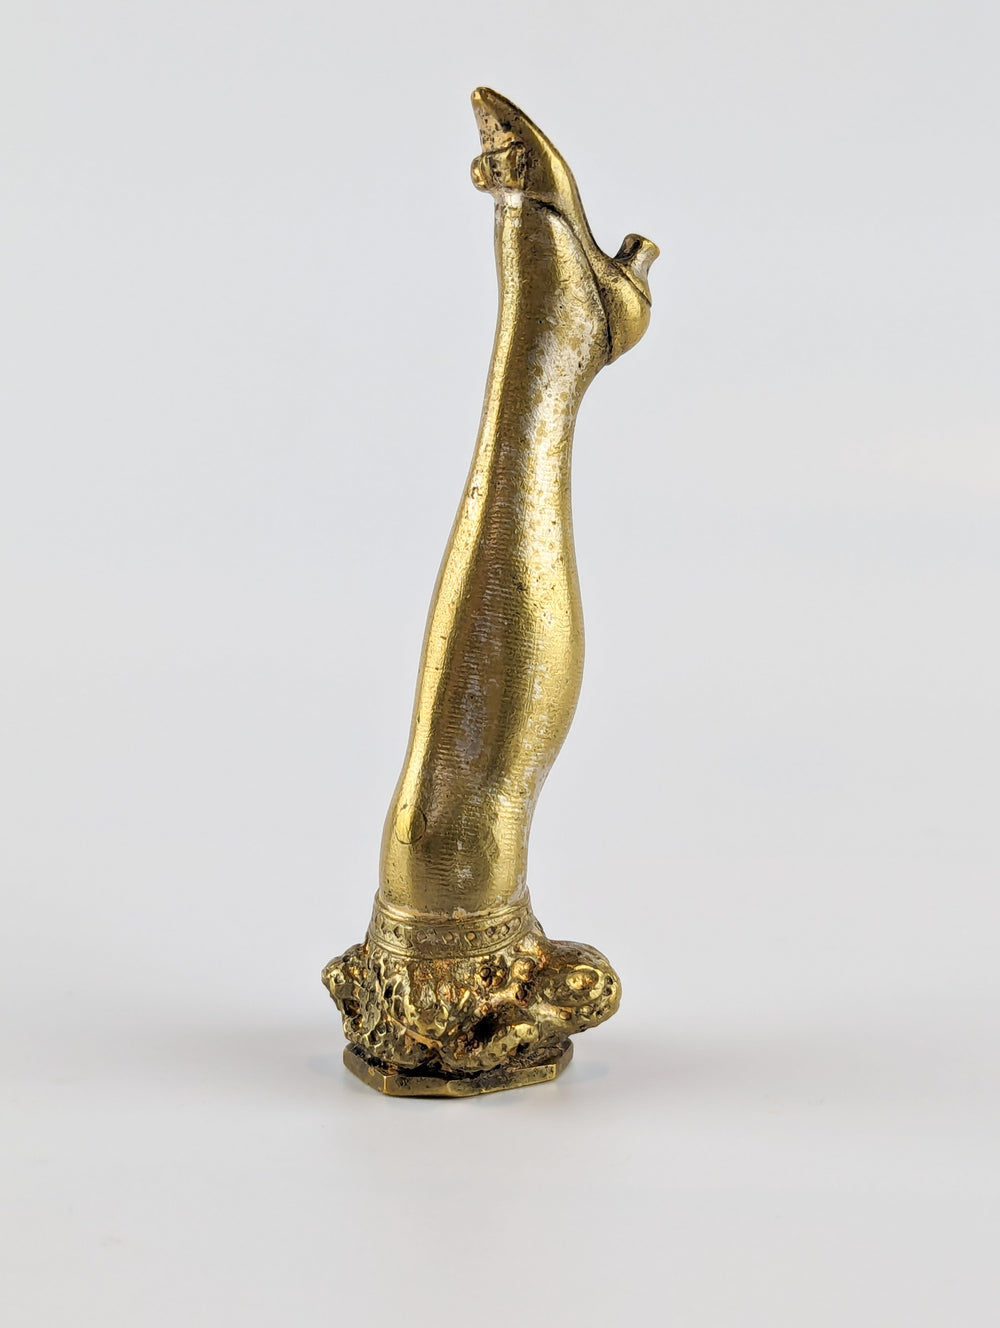 Unusual Lady's Leg Gilt Brass Continental Armorial Desk Seal